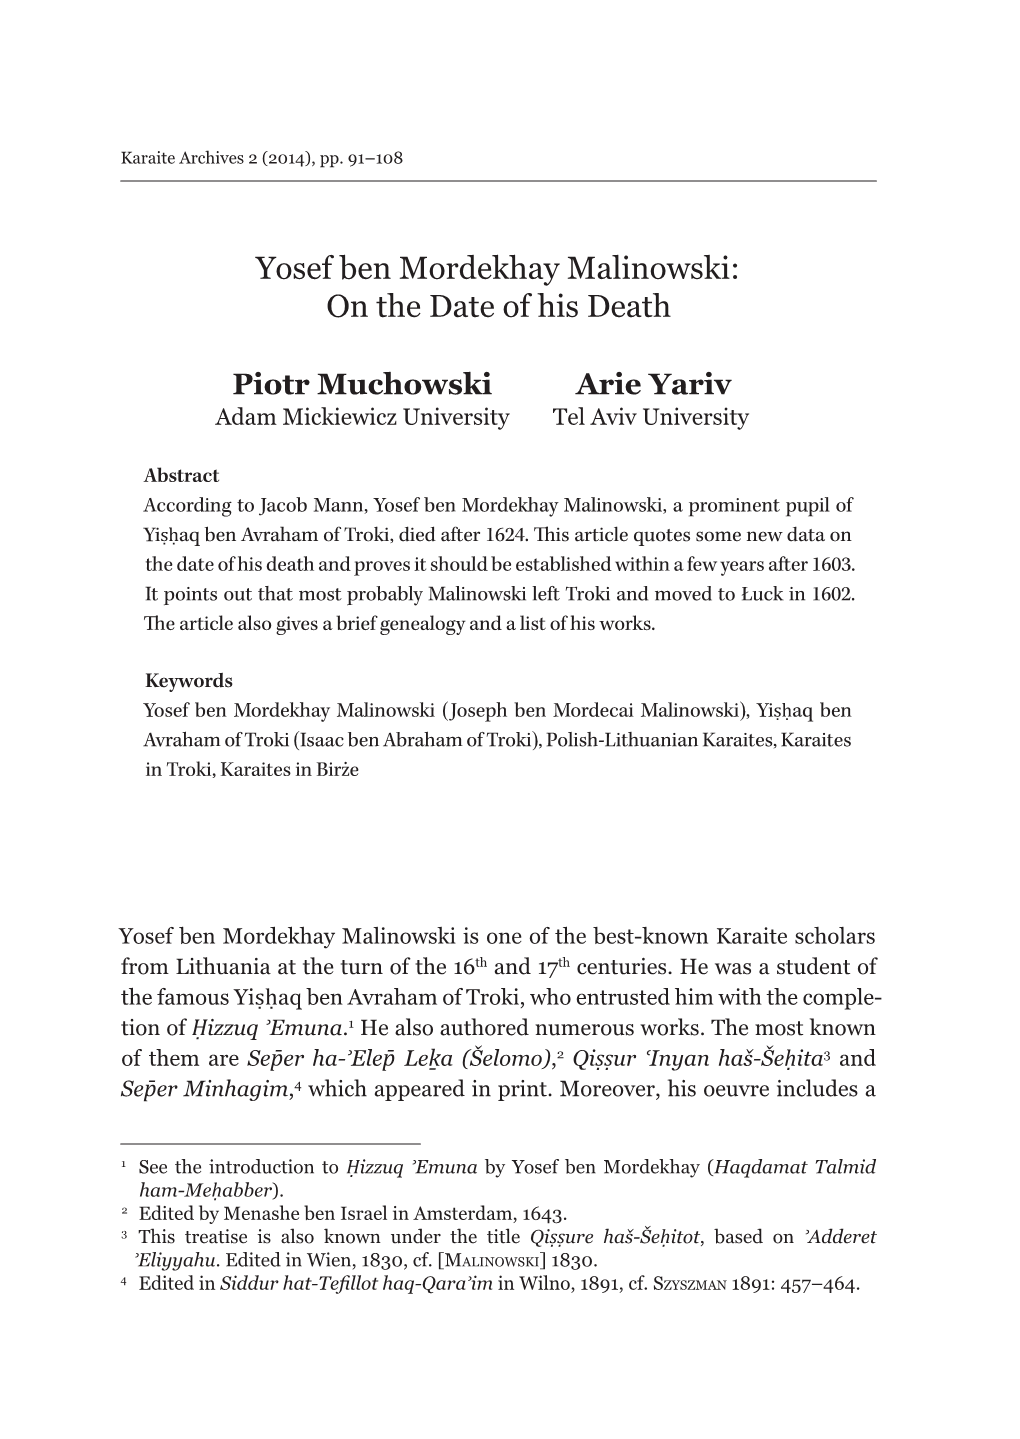 Yosef Ben Mordekhay Malinowski: on the Date of His Death